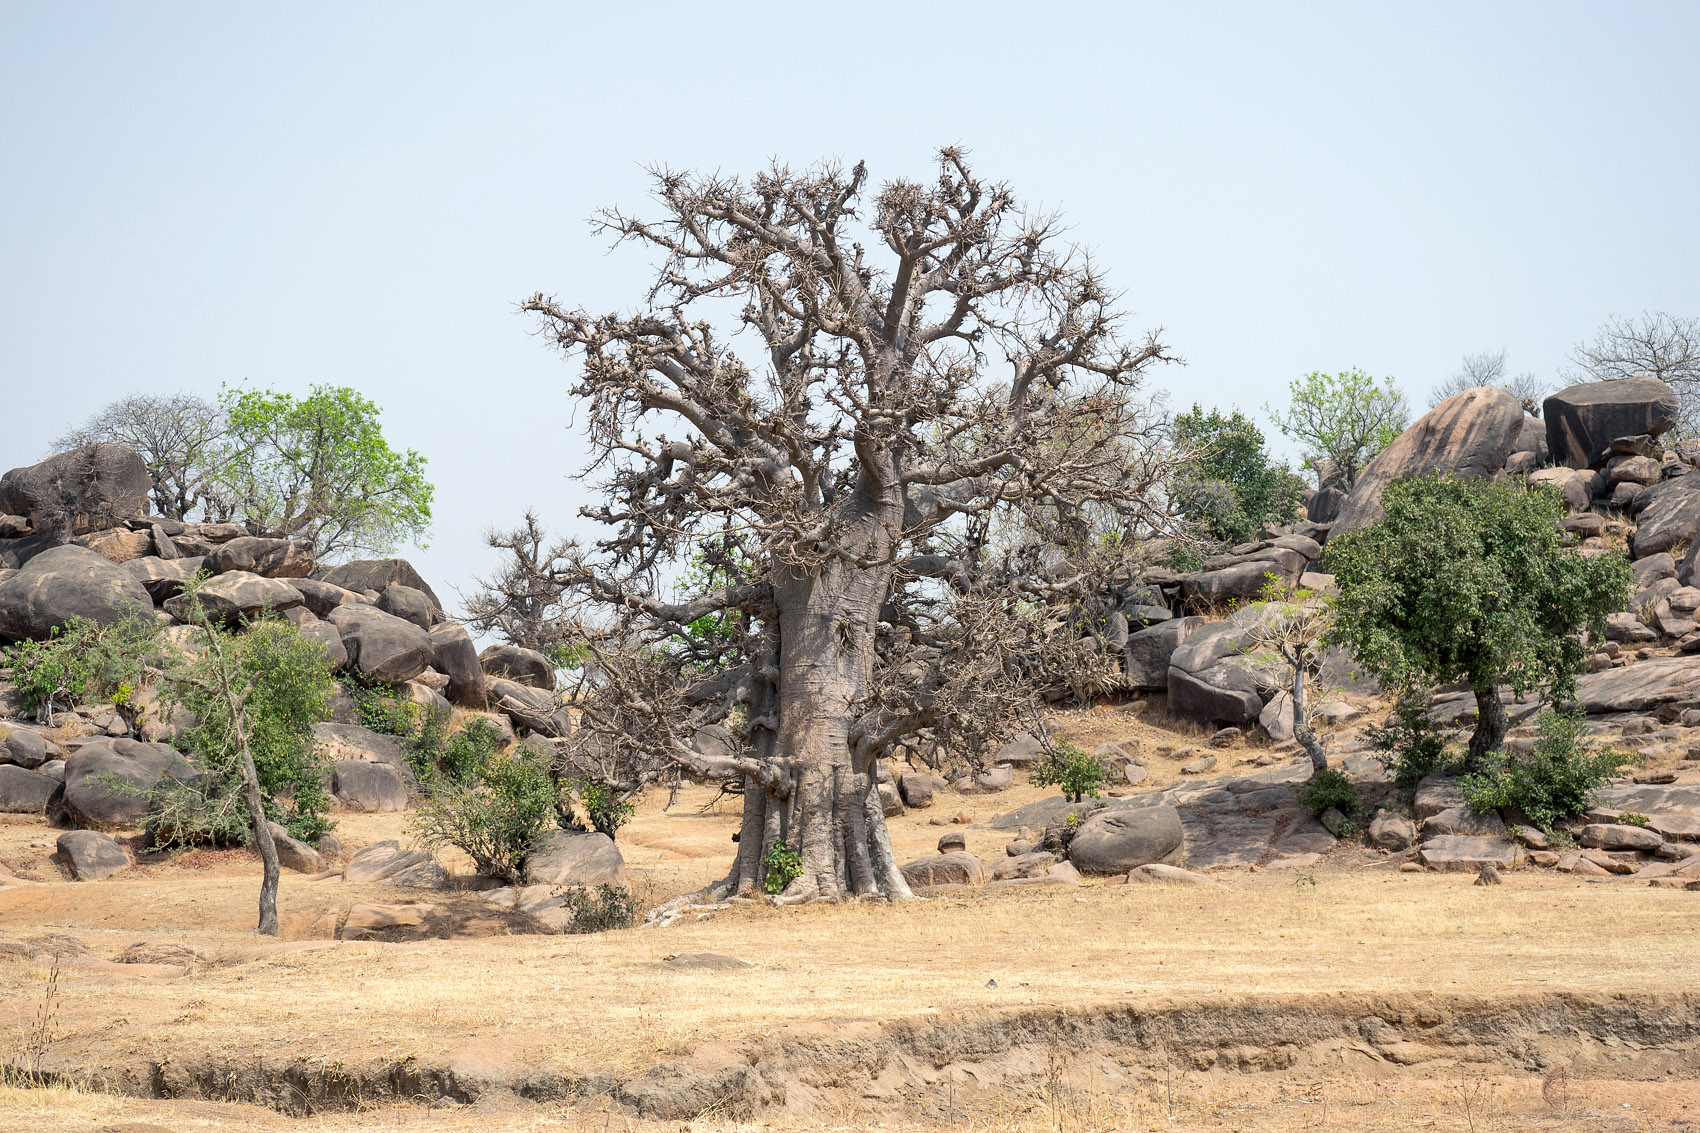 Bongo alter Baum in Ghana